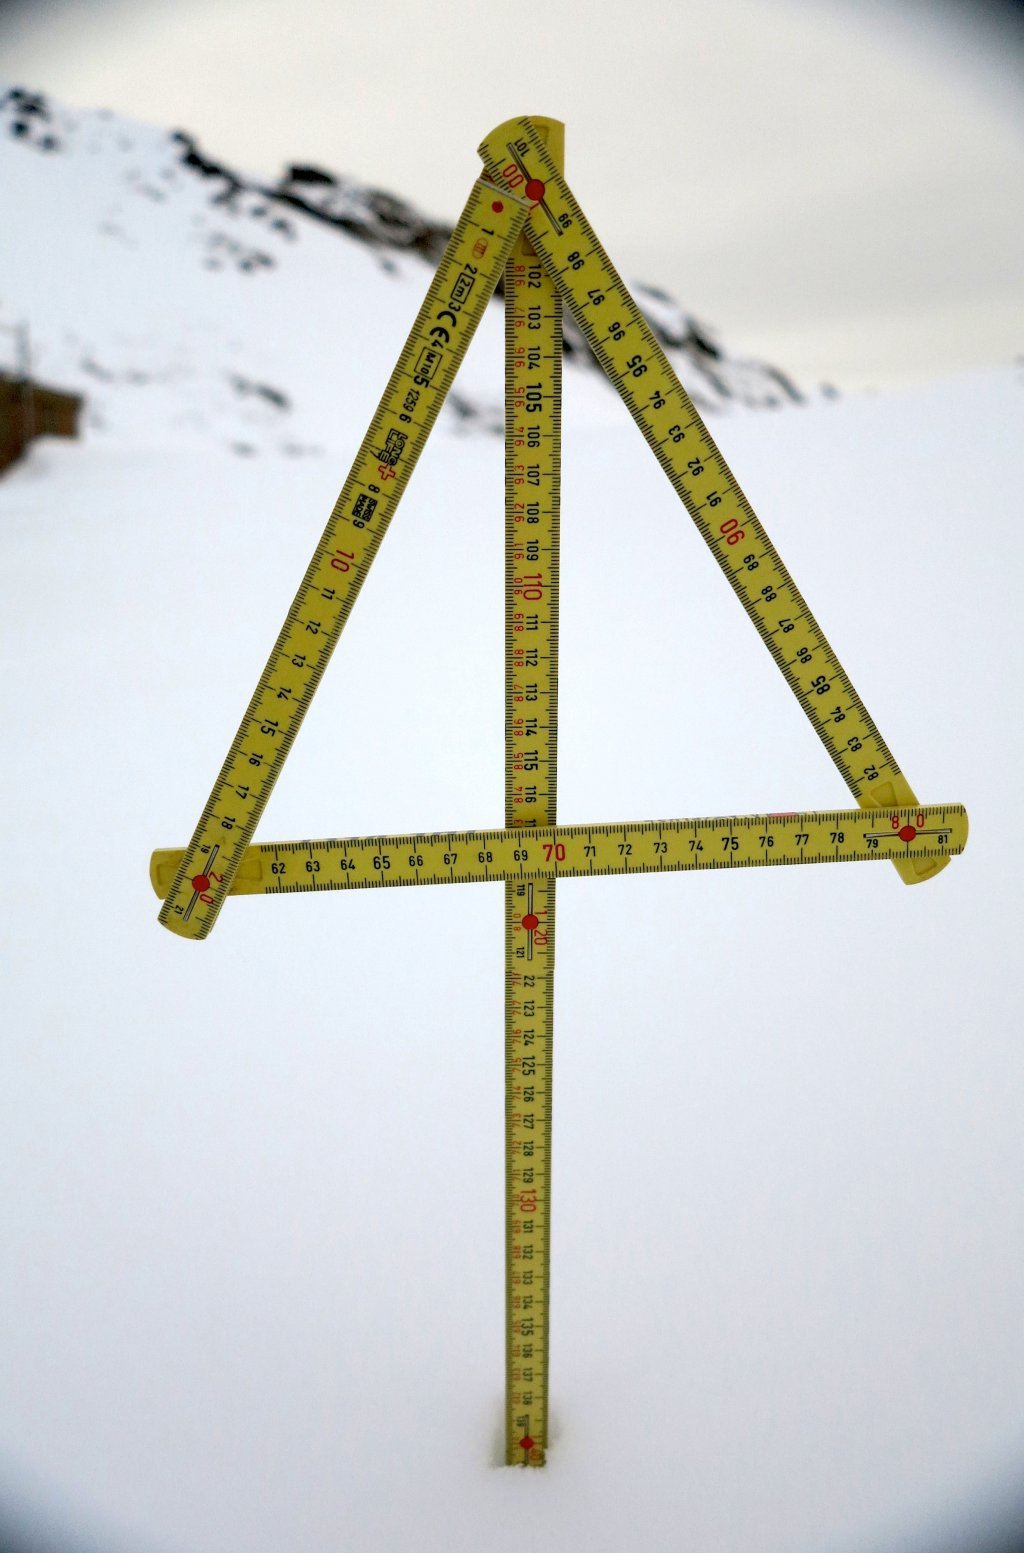 Snow depth measurement